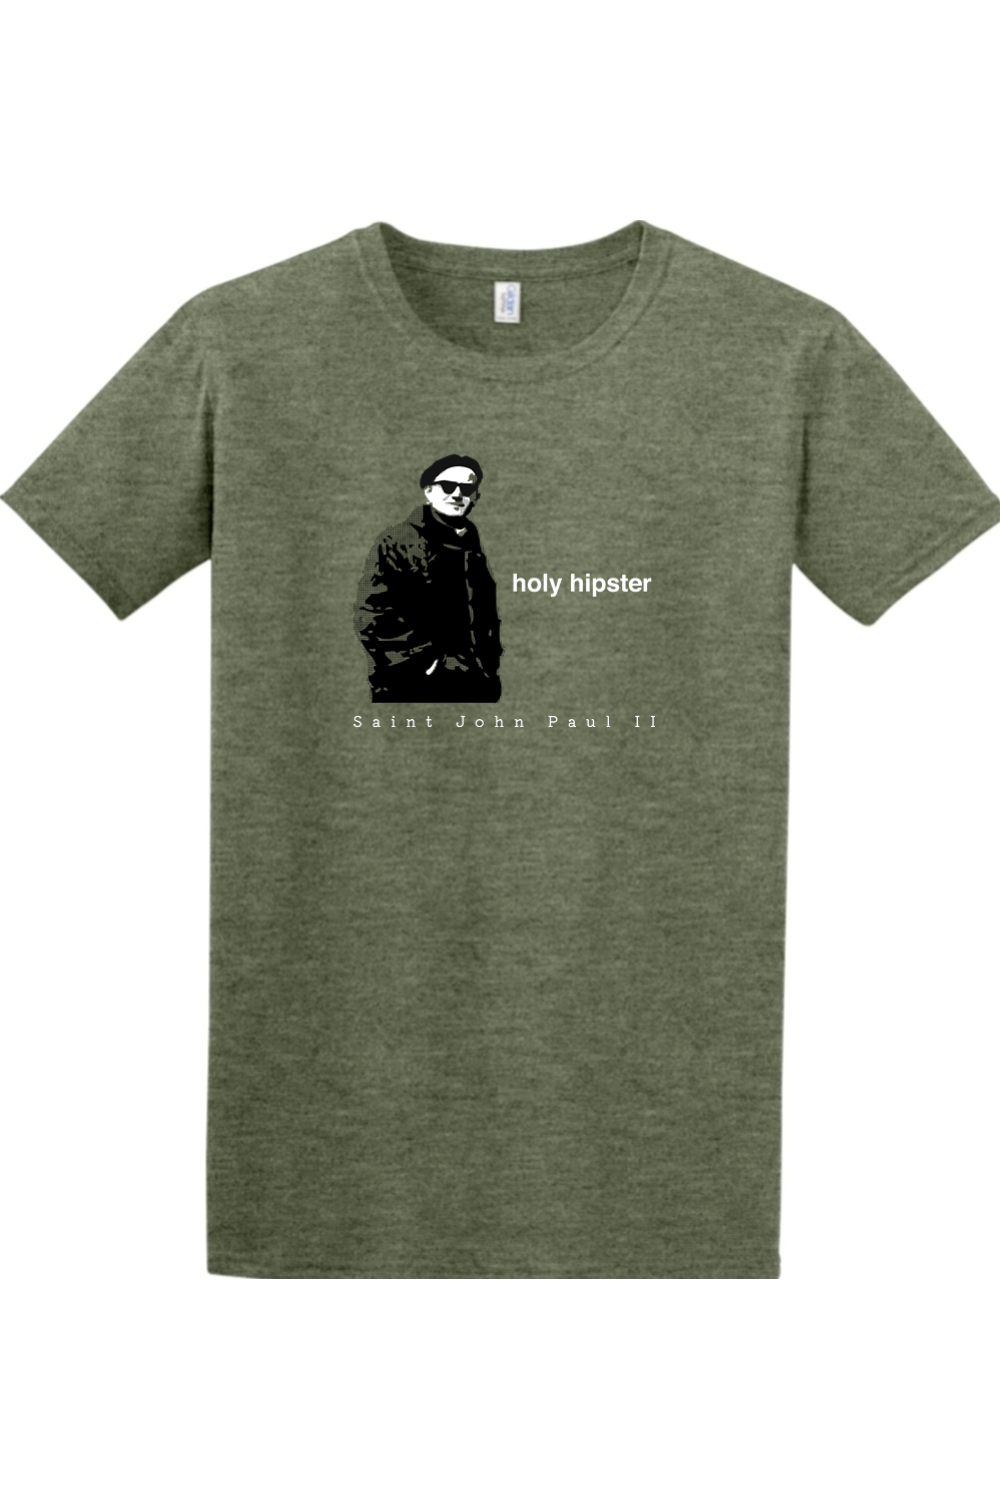 Holy Hipster - St. John Paul II Adult T-shirt